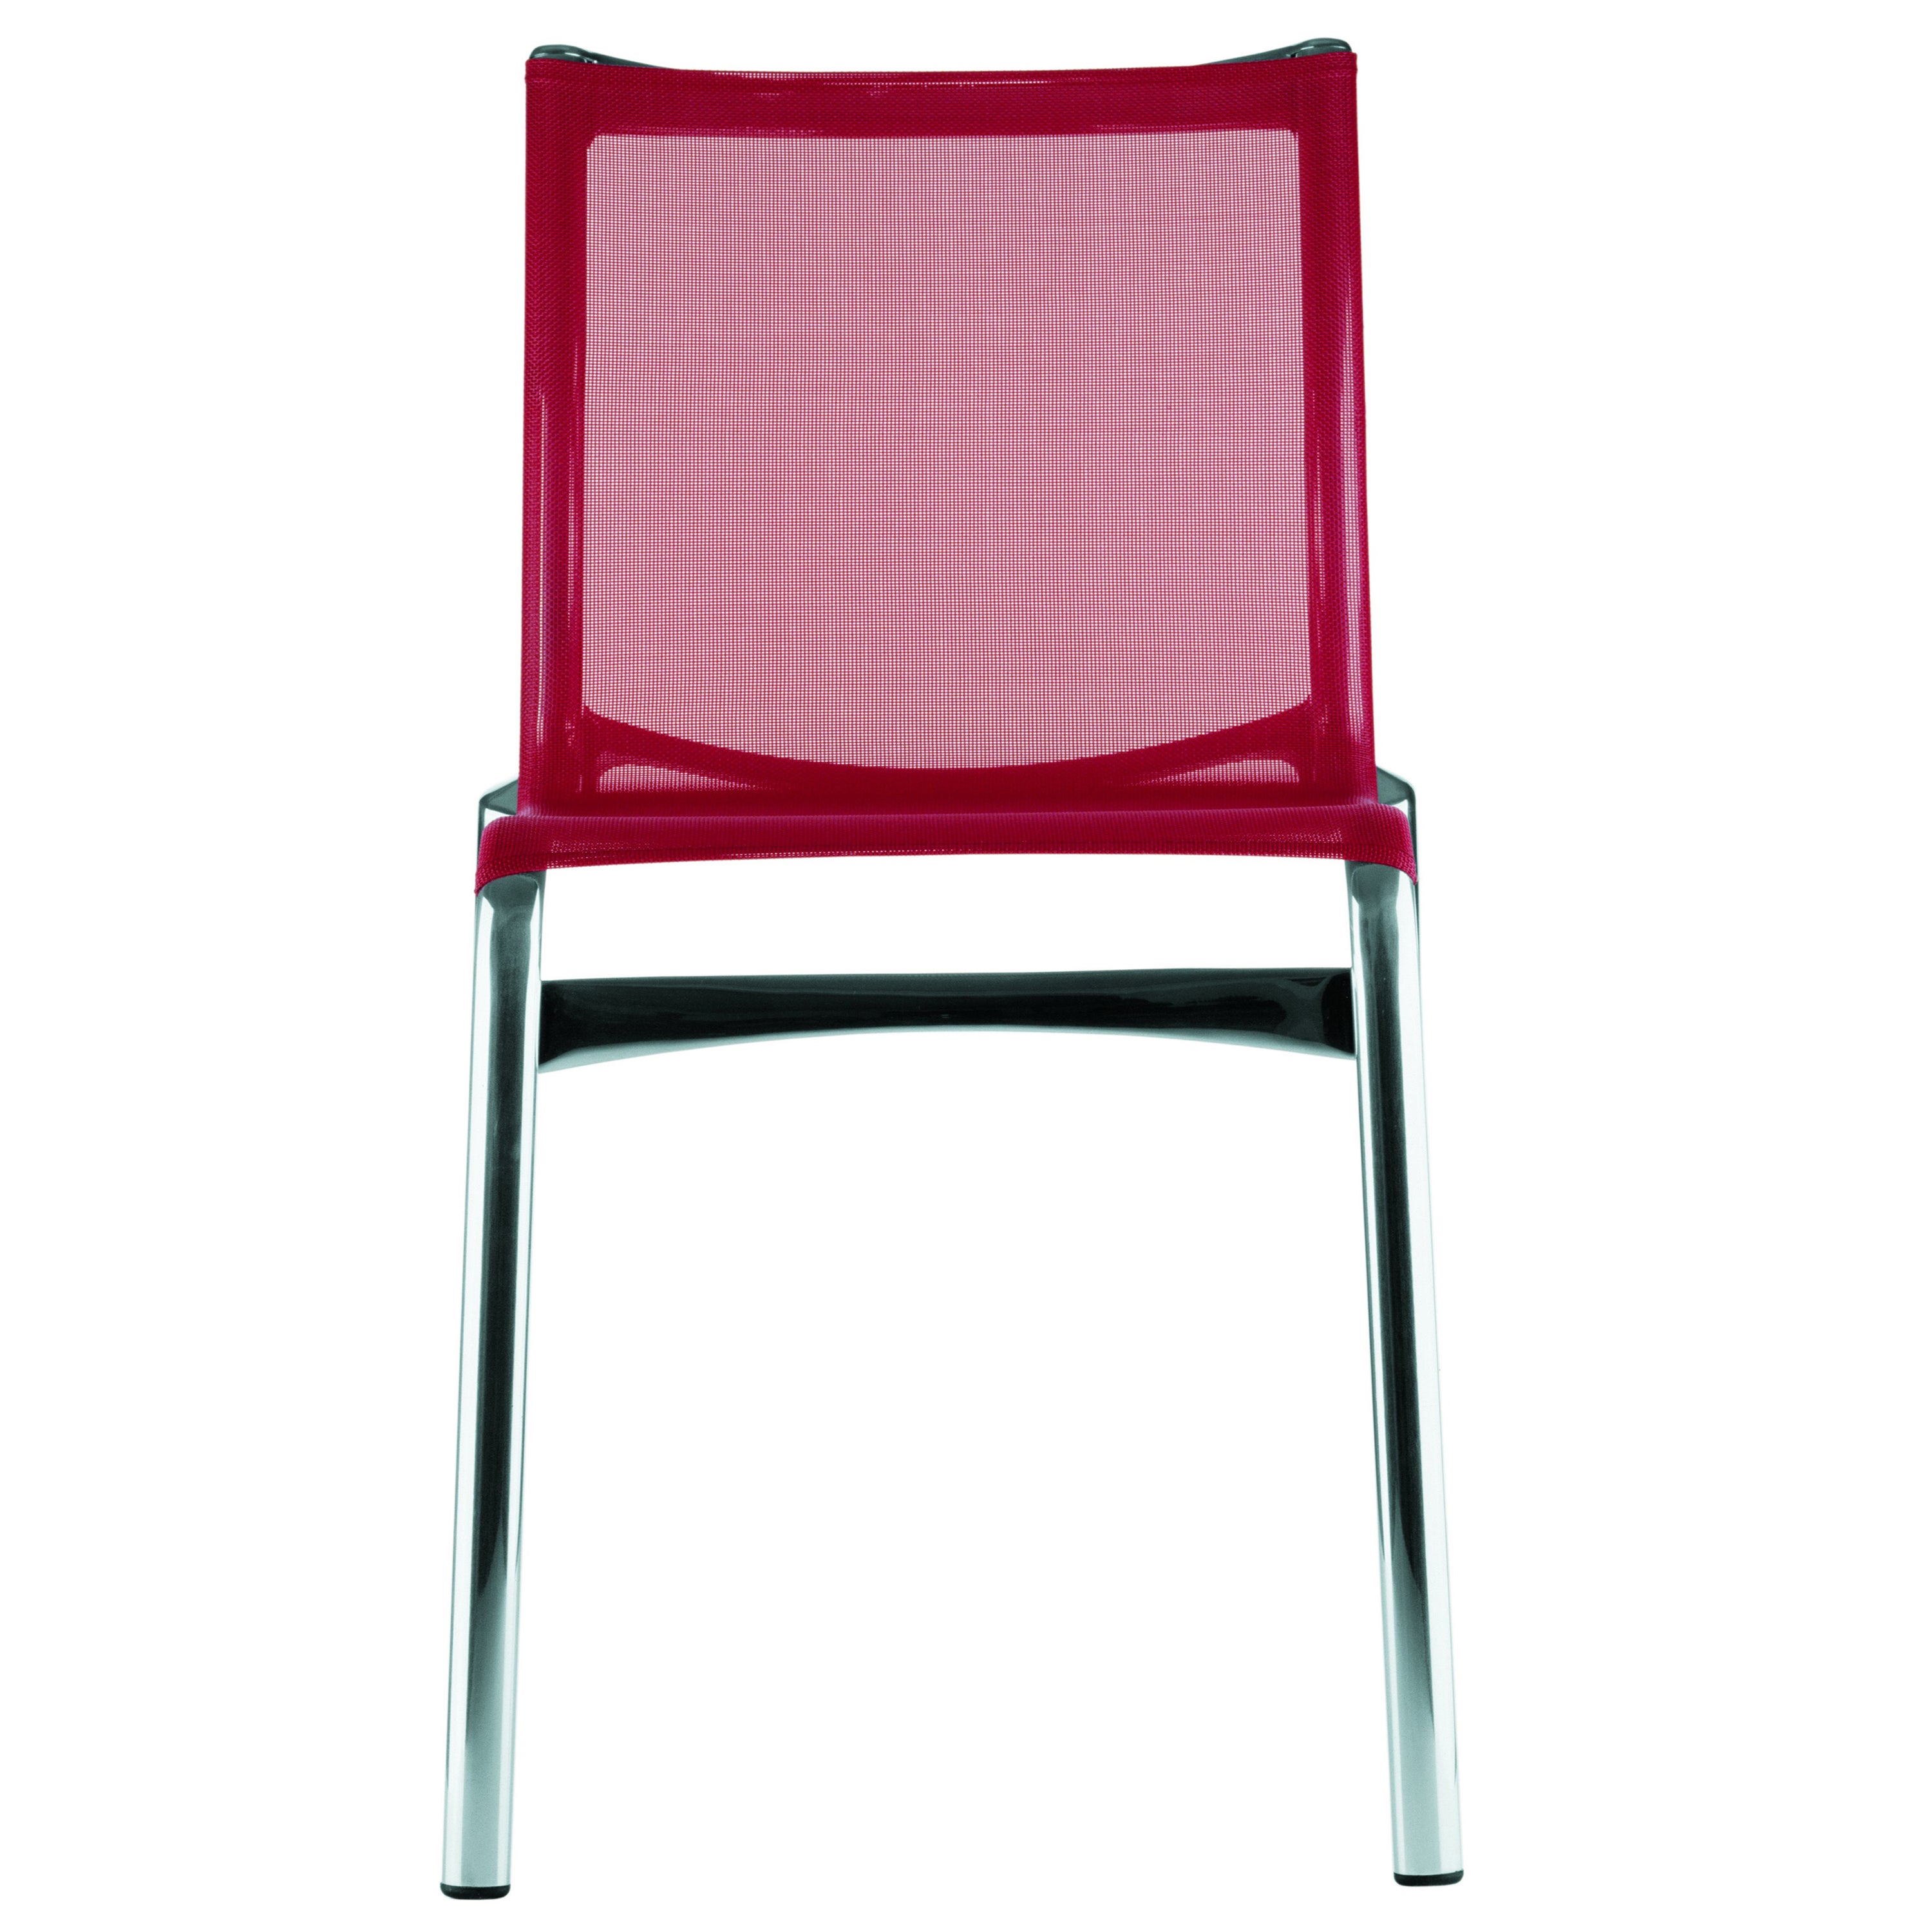 Alias Bigframe 44 Chair in Red Mesh with Chromed Aluminium Frame by Alberto Meda